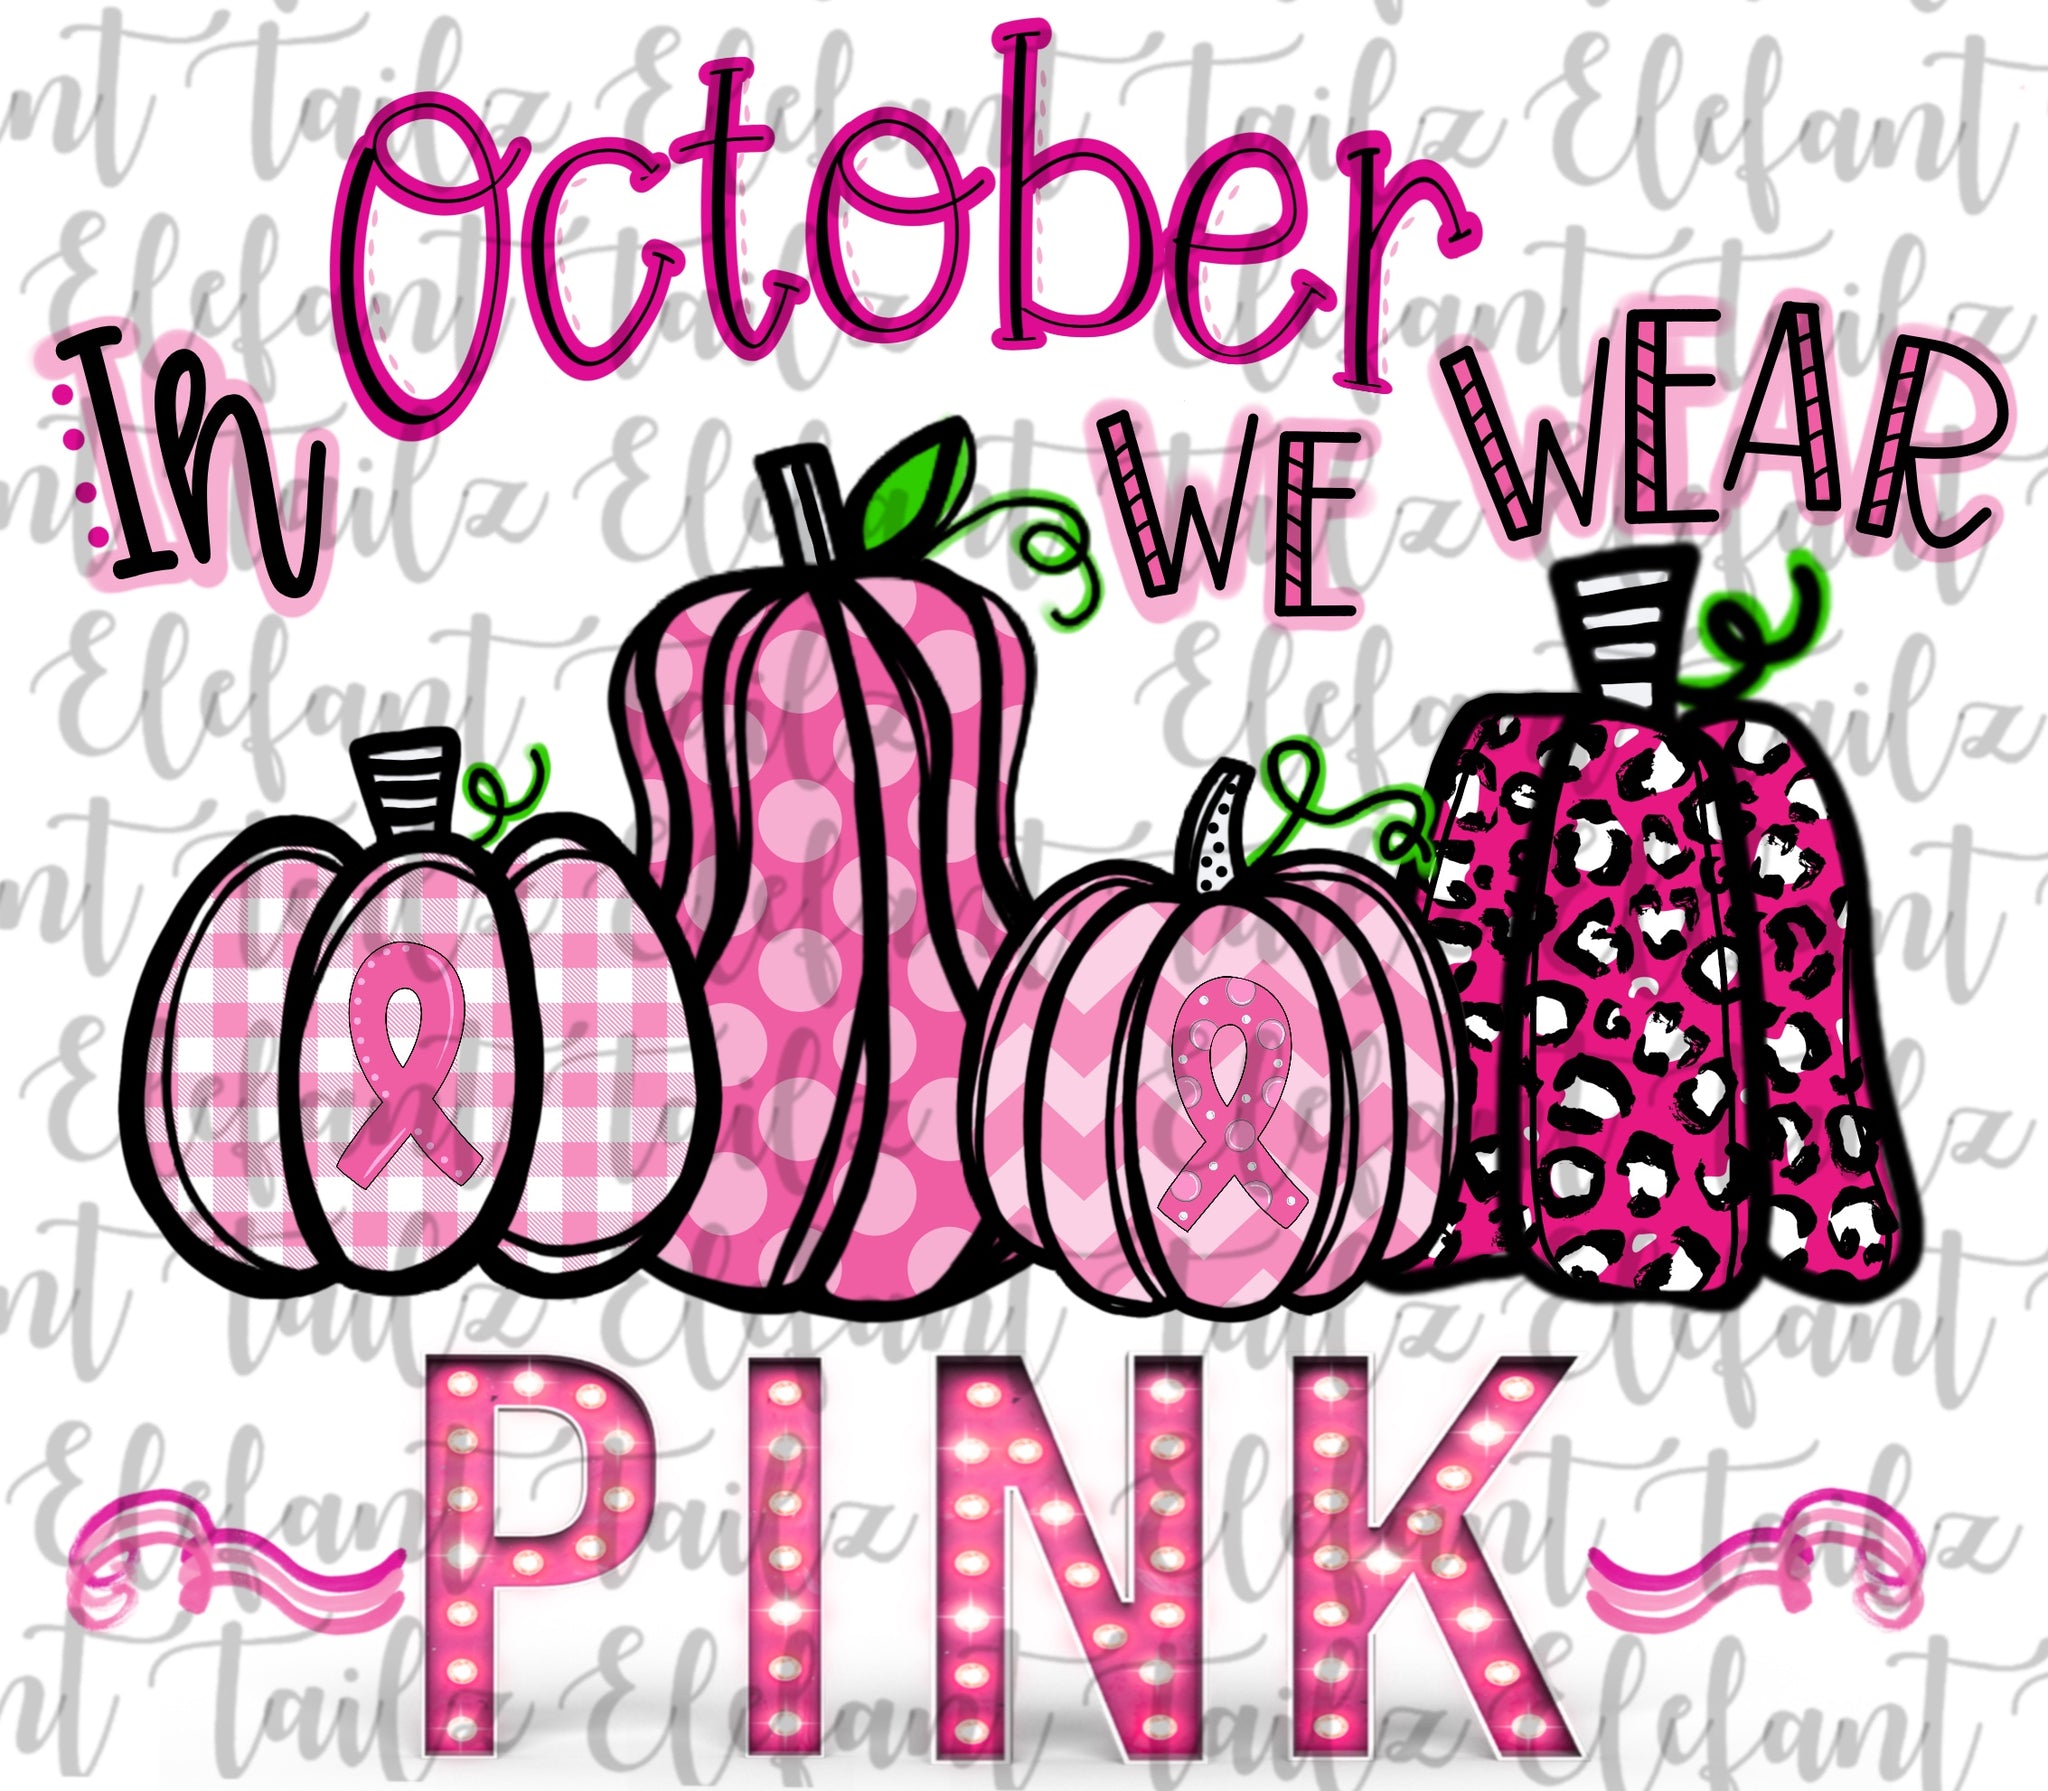 In October We Wear Pink Breast Cancer Awareness Pumpkins #3